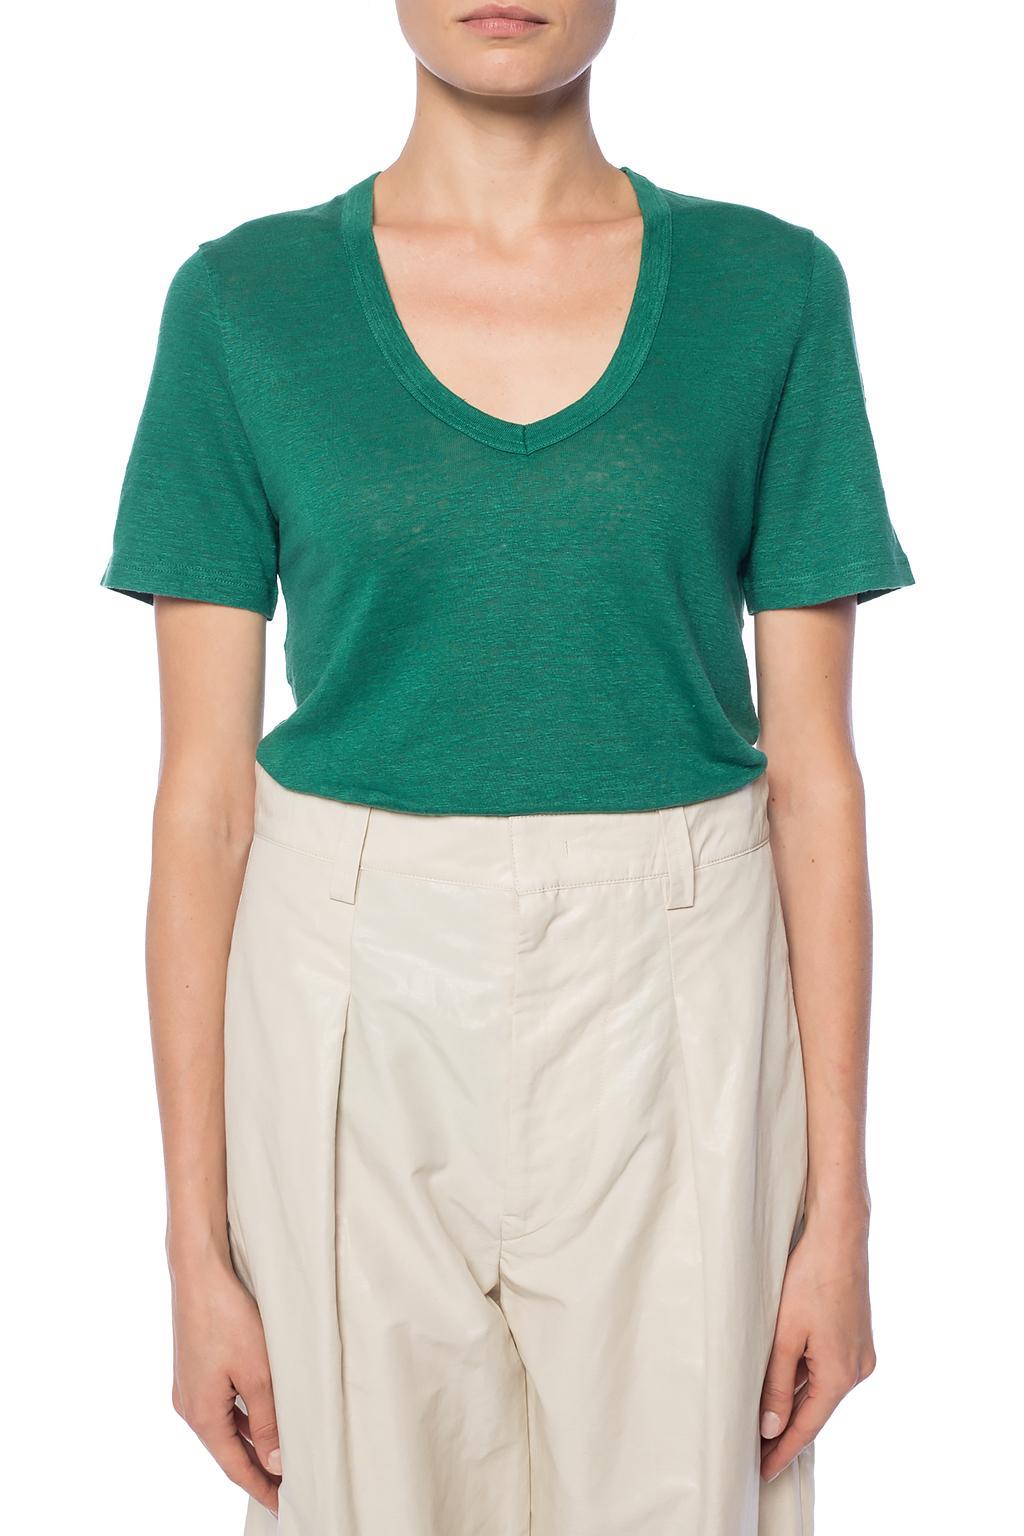 Étoile Isabel Marant Linen V-neck T-shirt in Green - Lyst